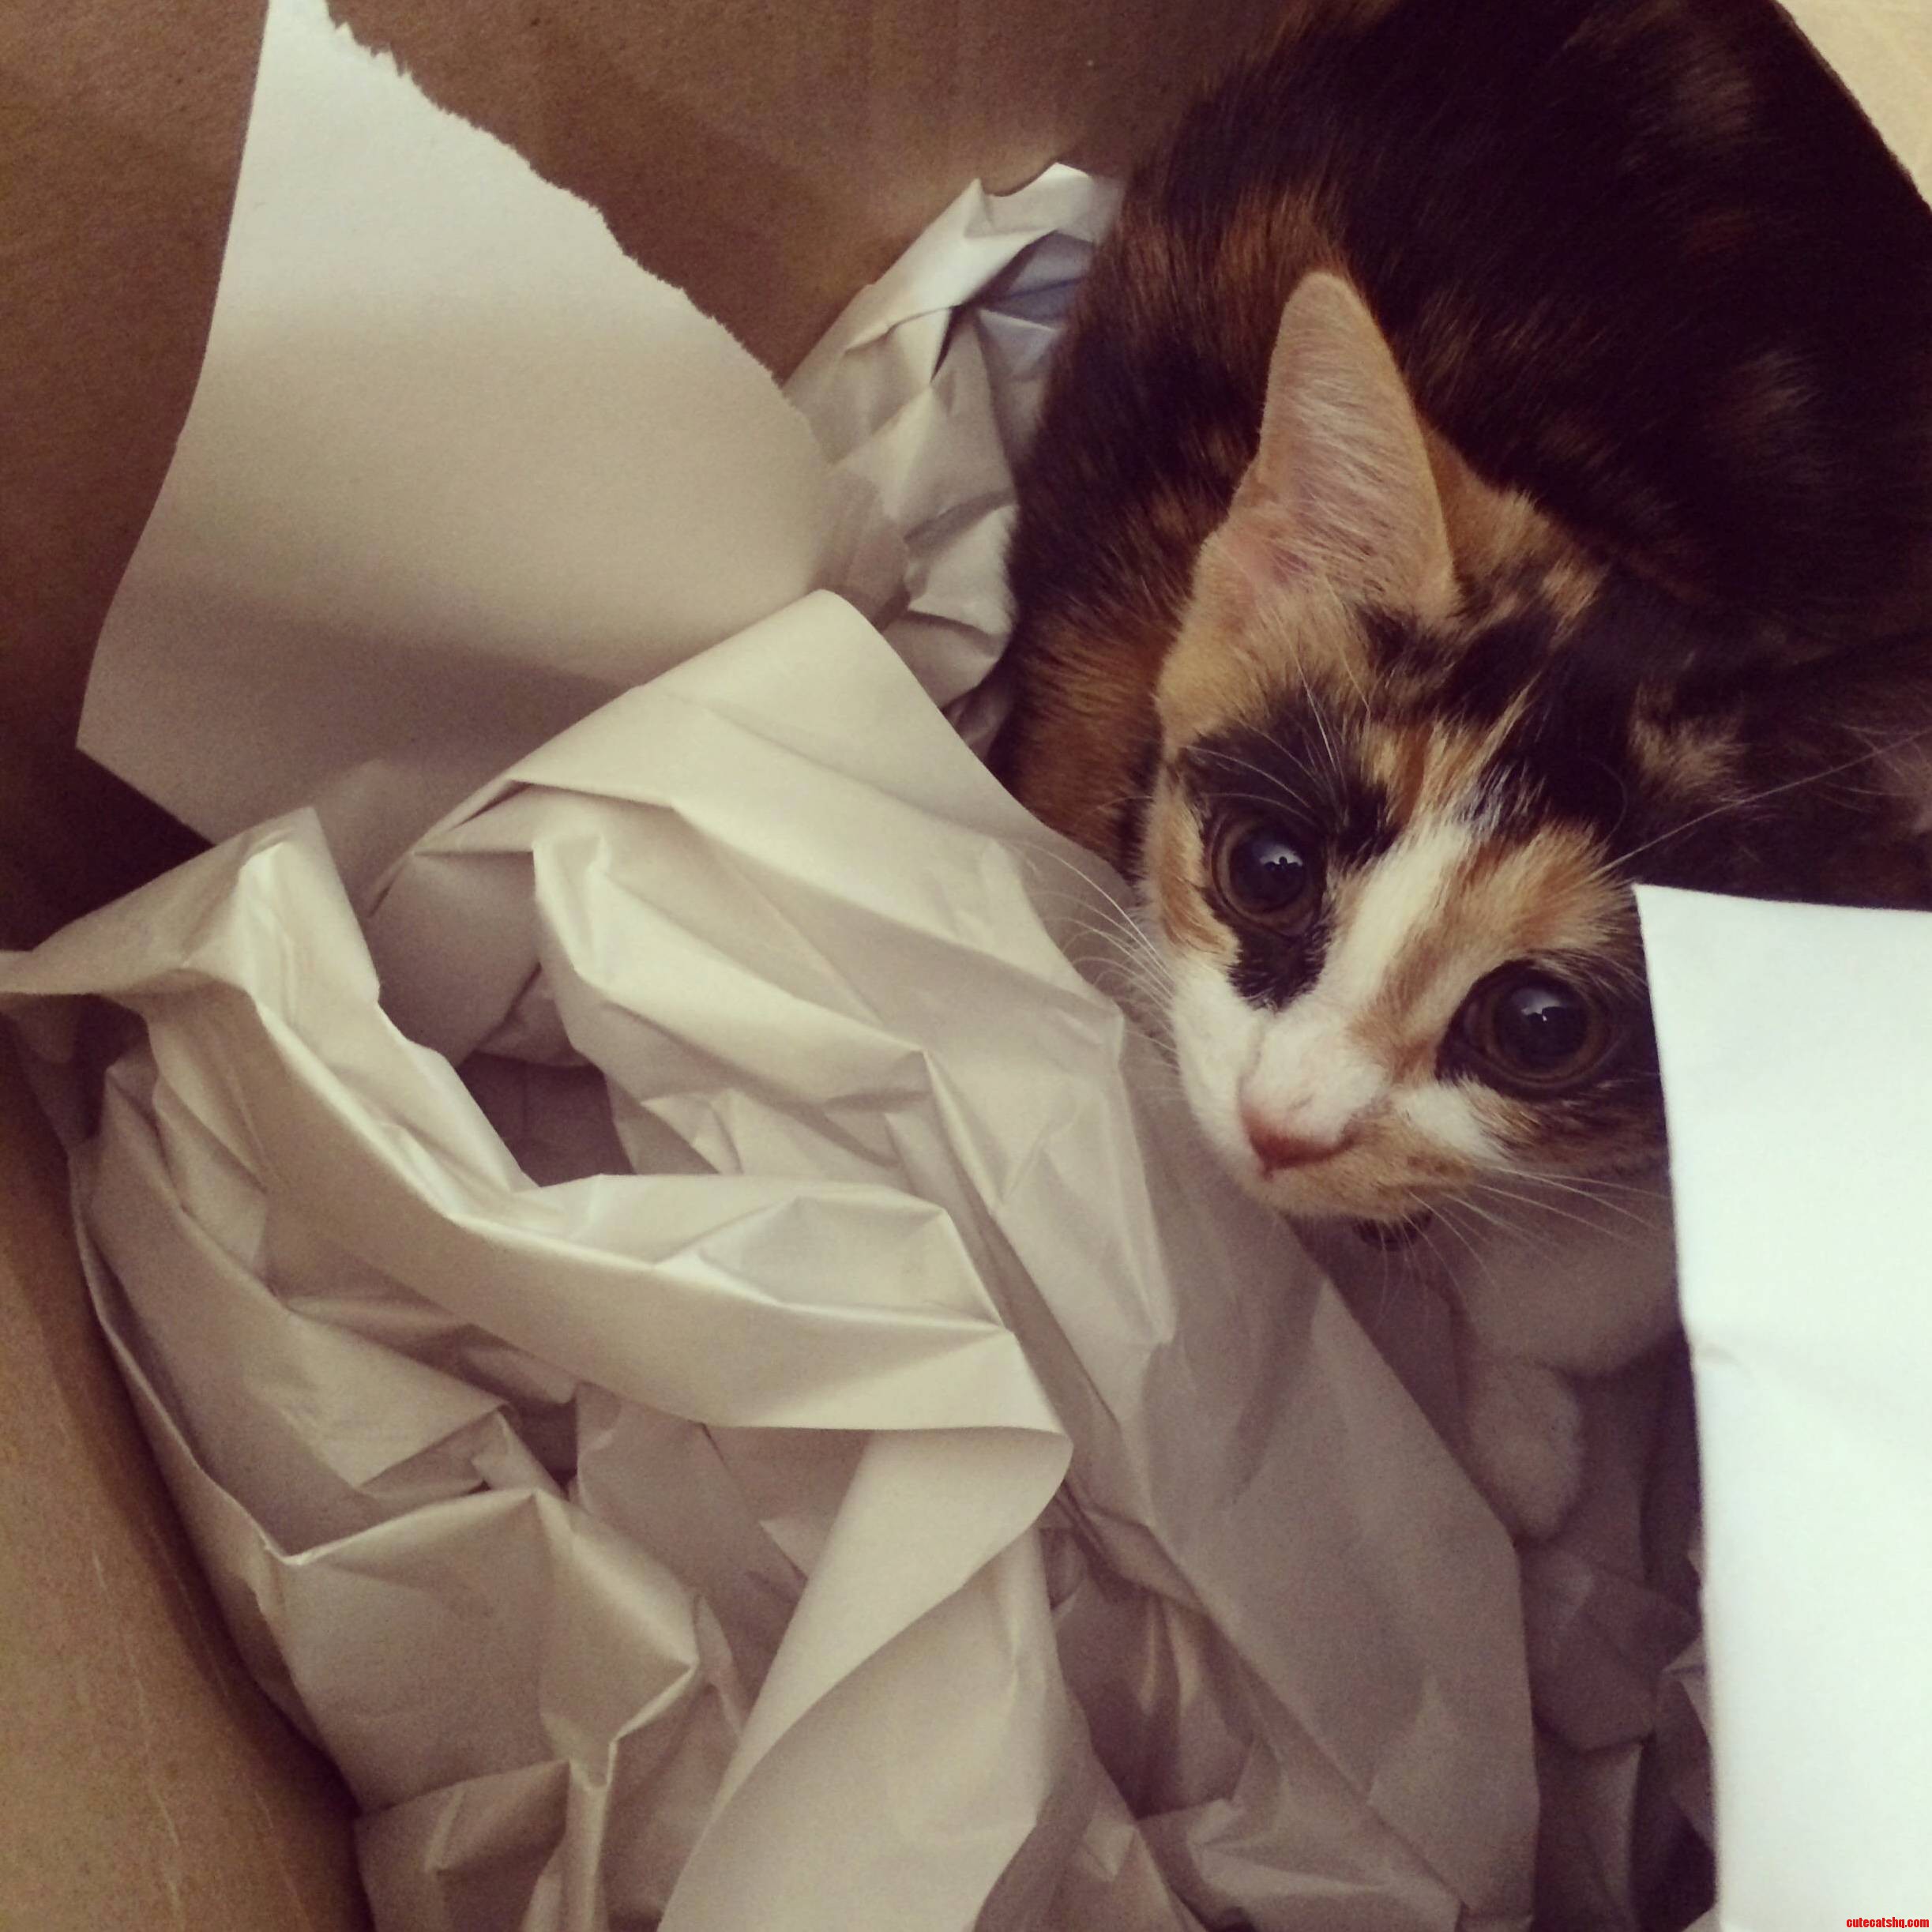 She Loves Boxes